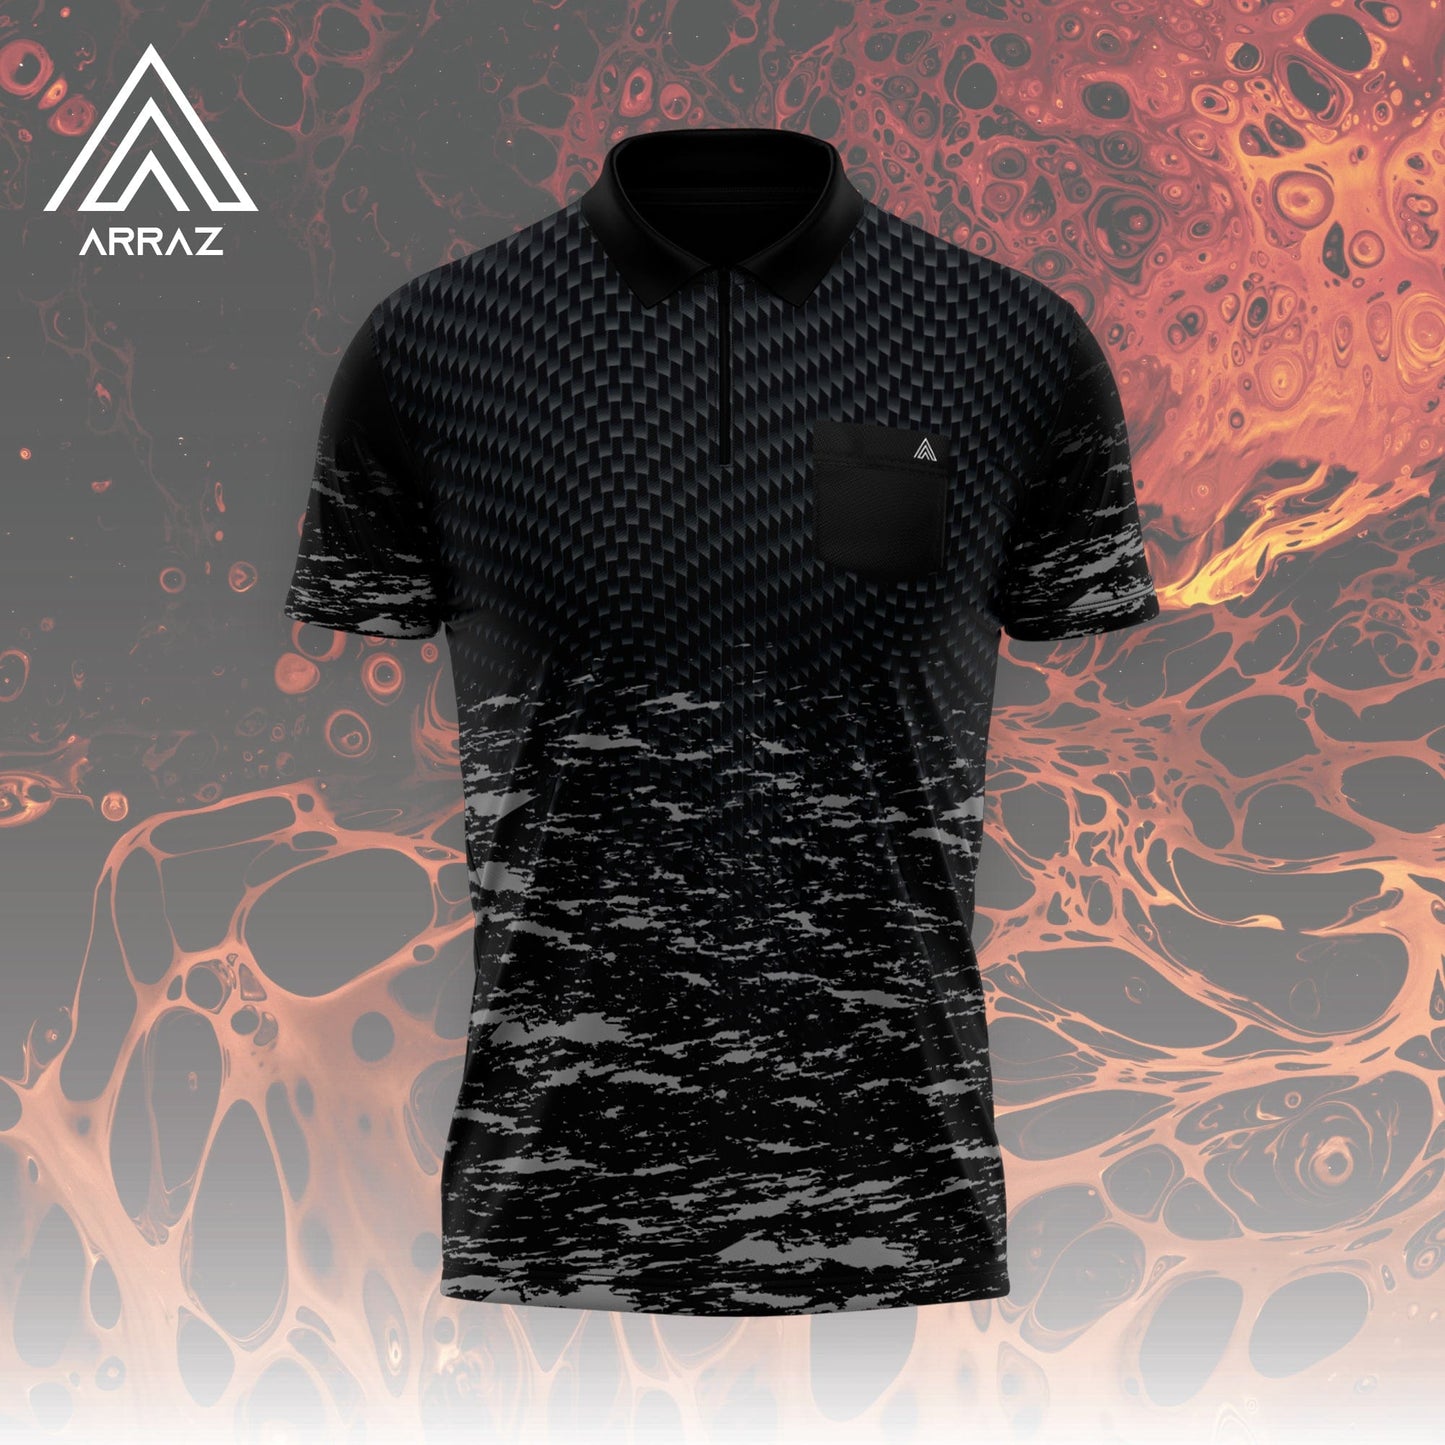 Arraz Lava Dart Shirt - with Pocket - Black & Grey